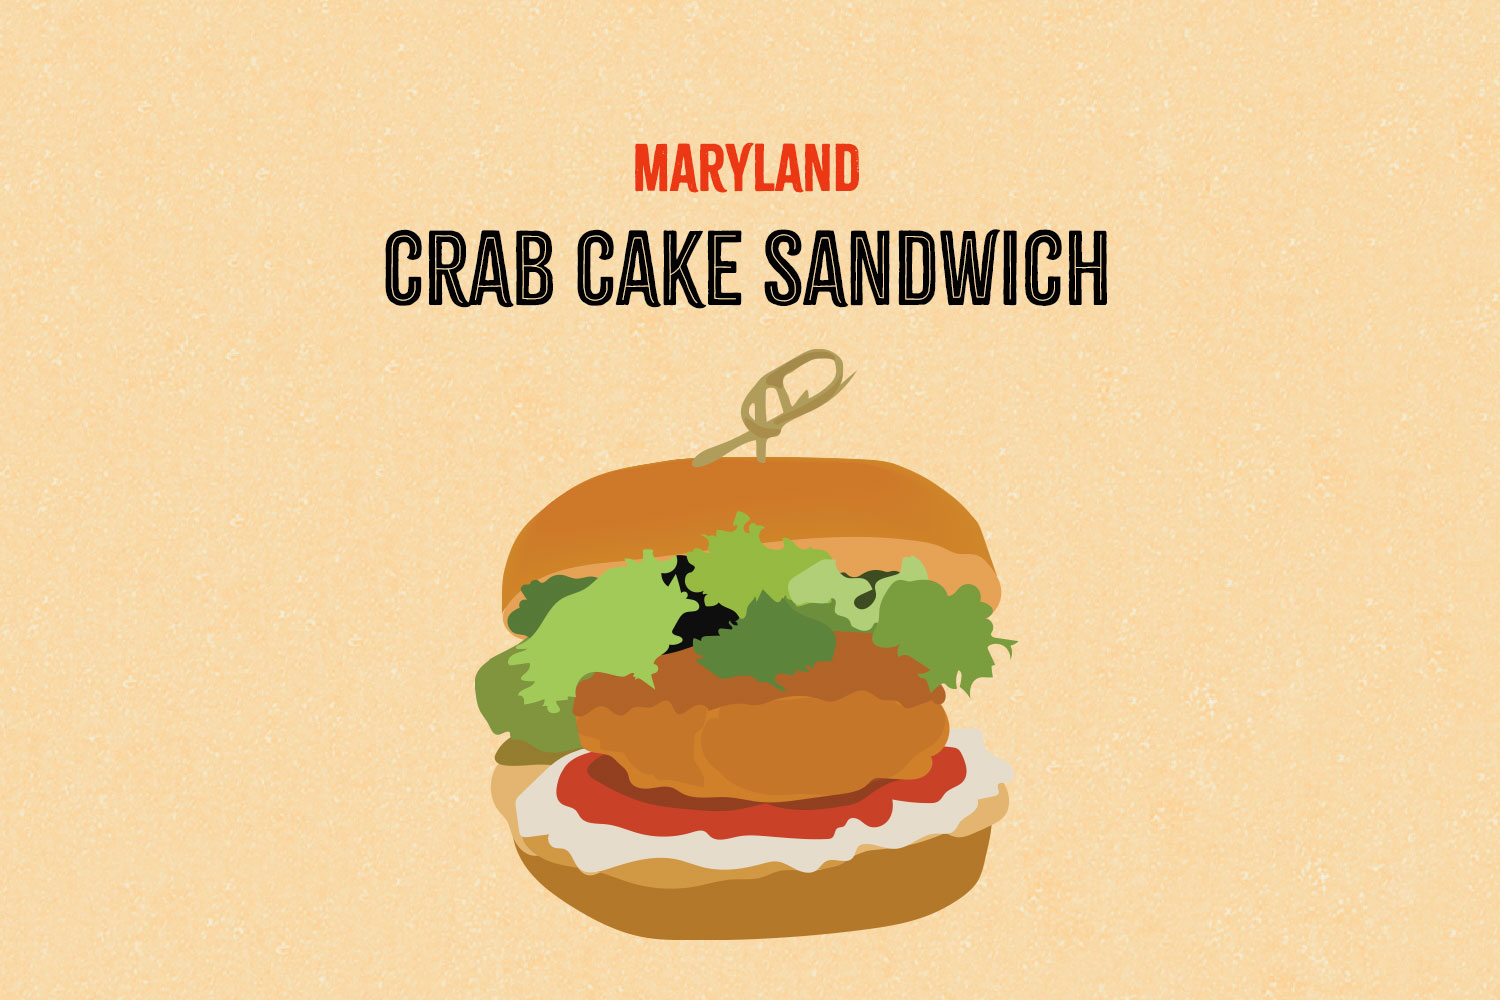 Crab Cake Sandwich illustration